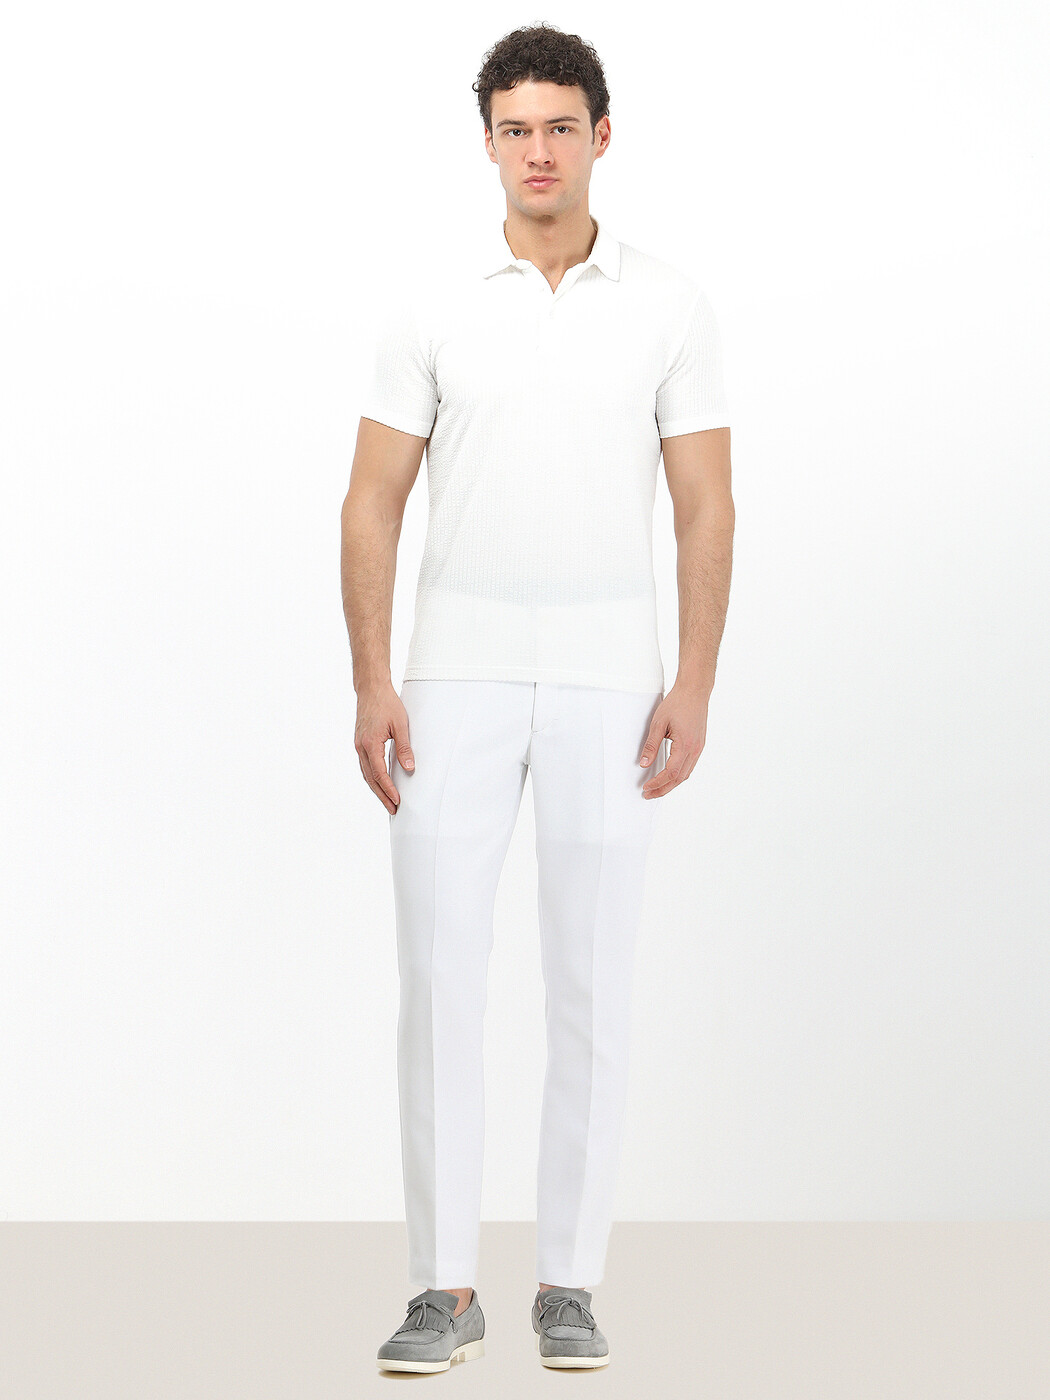 KİP - Beyaz Jakarlı Polo Yaka %100 Pamuk T-Shirt (1)